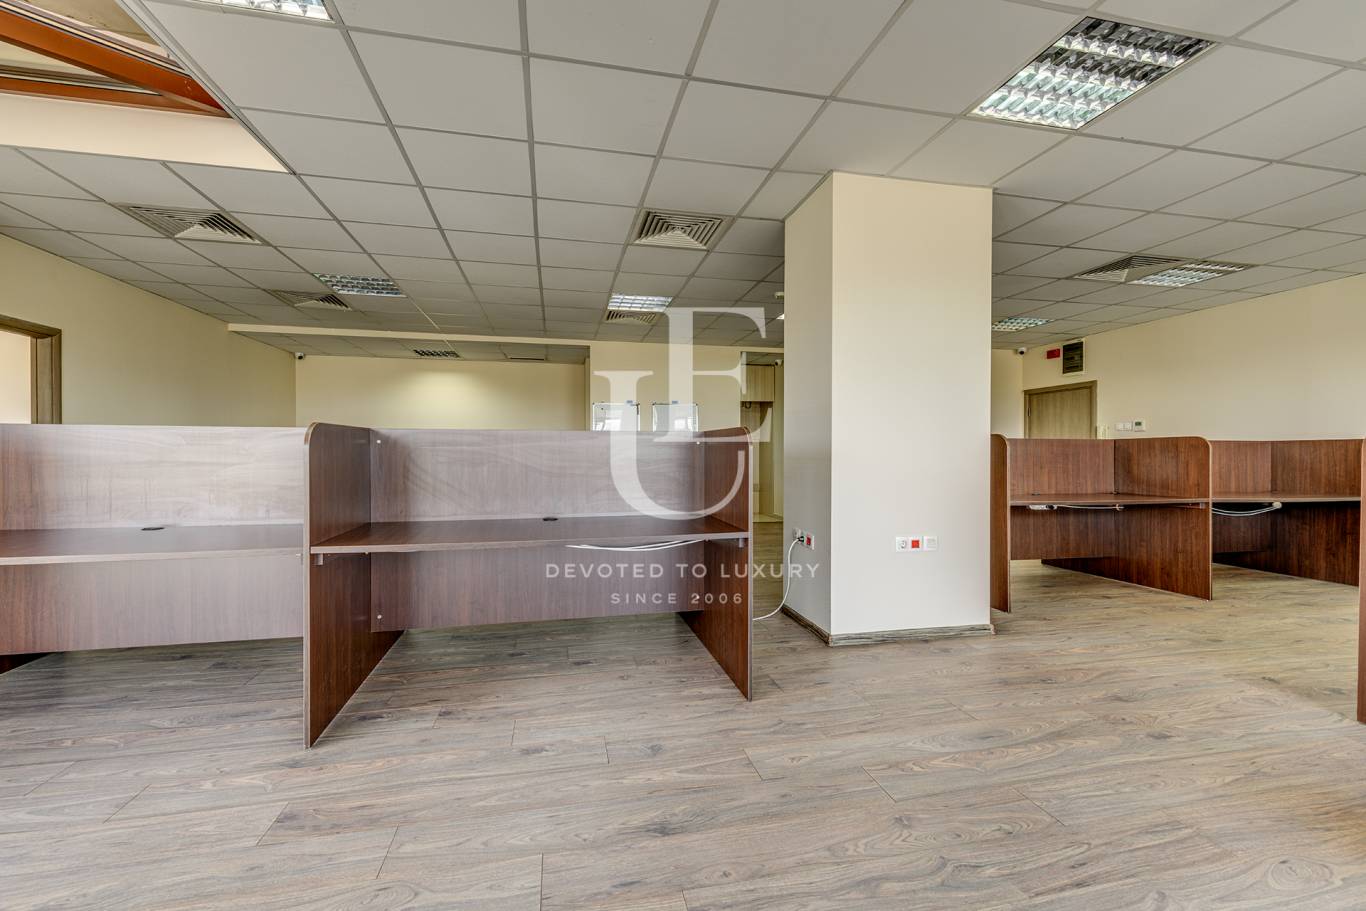 Офис под наем в София, Студентски град - код на имота: K17700 - image 10